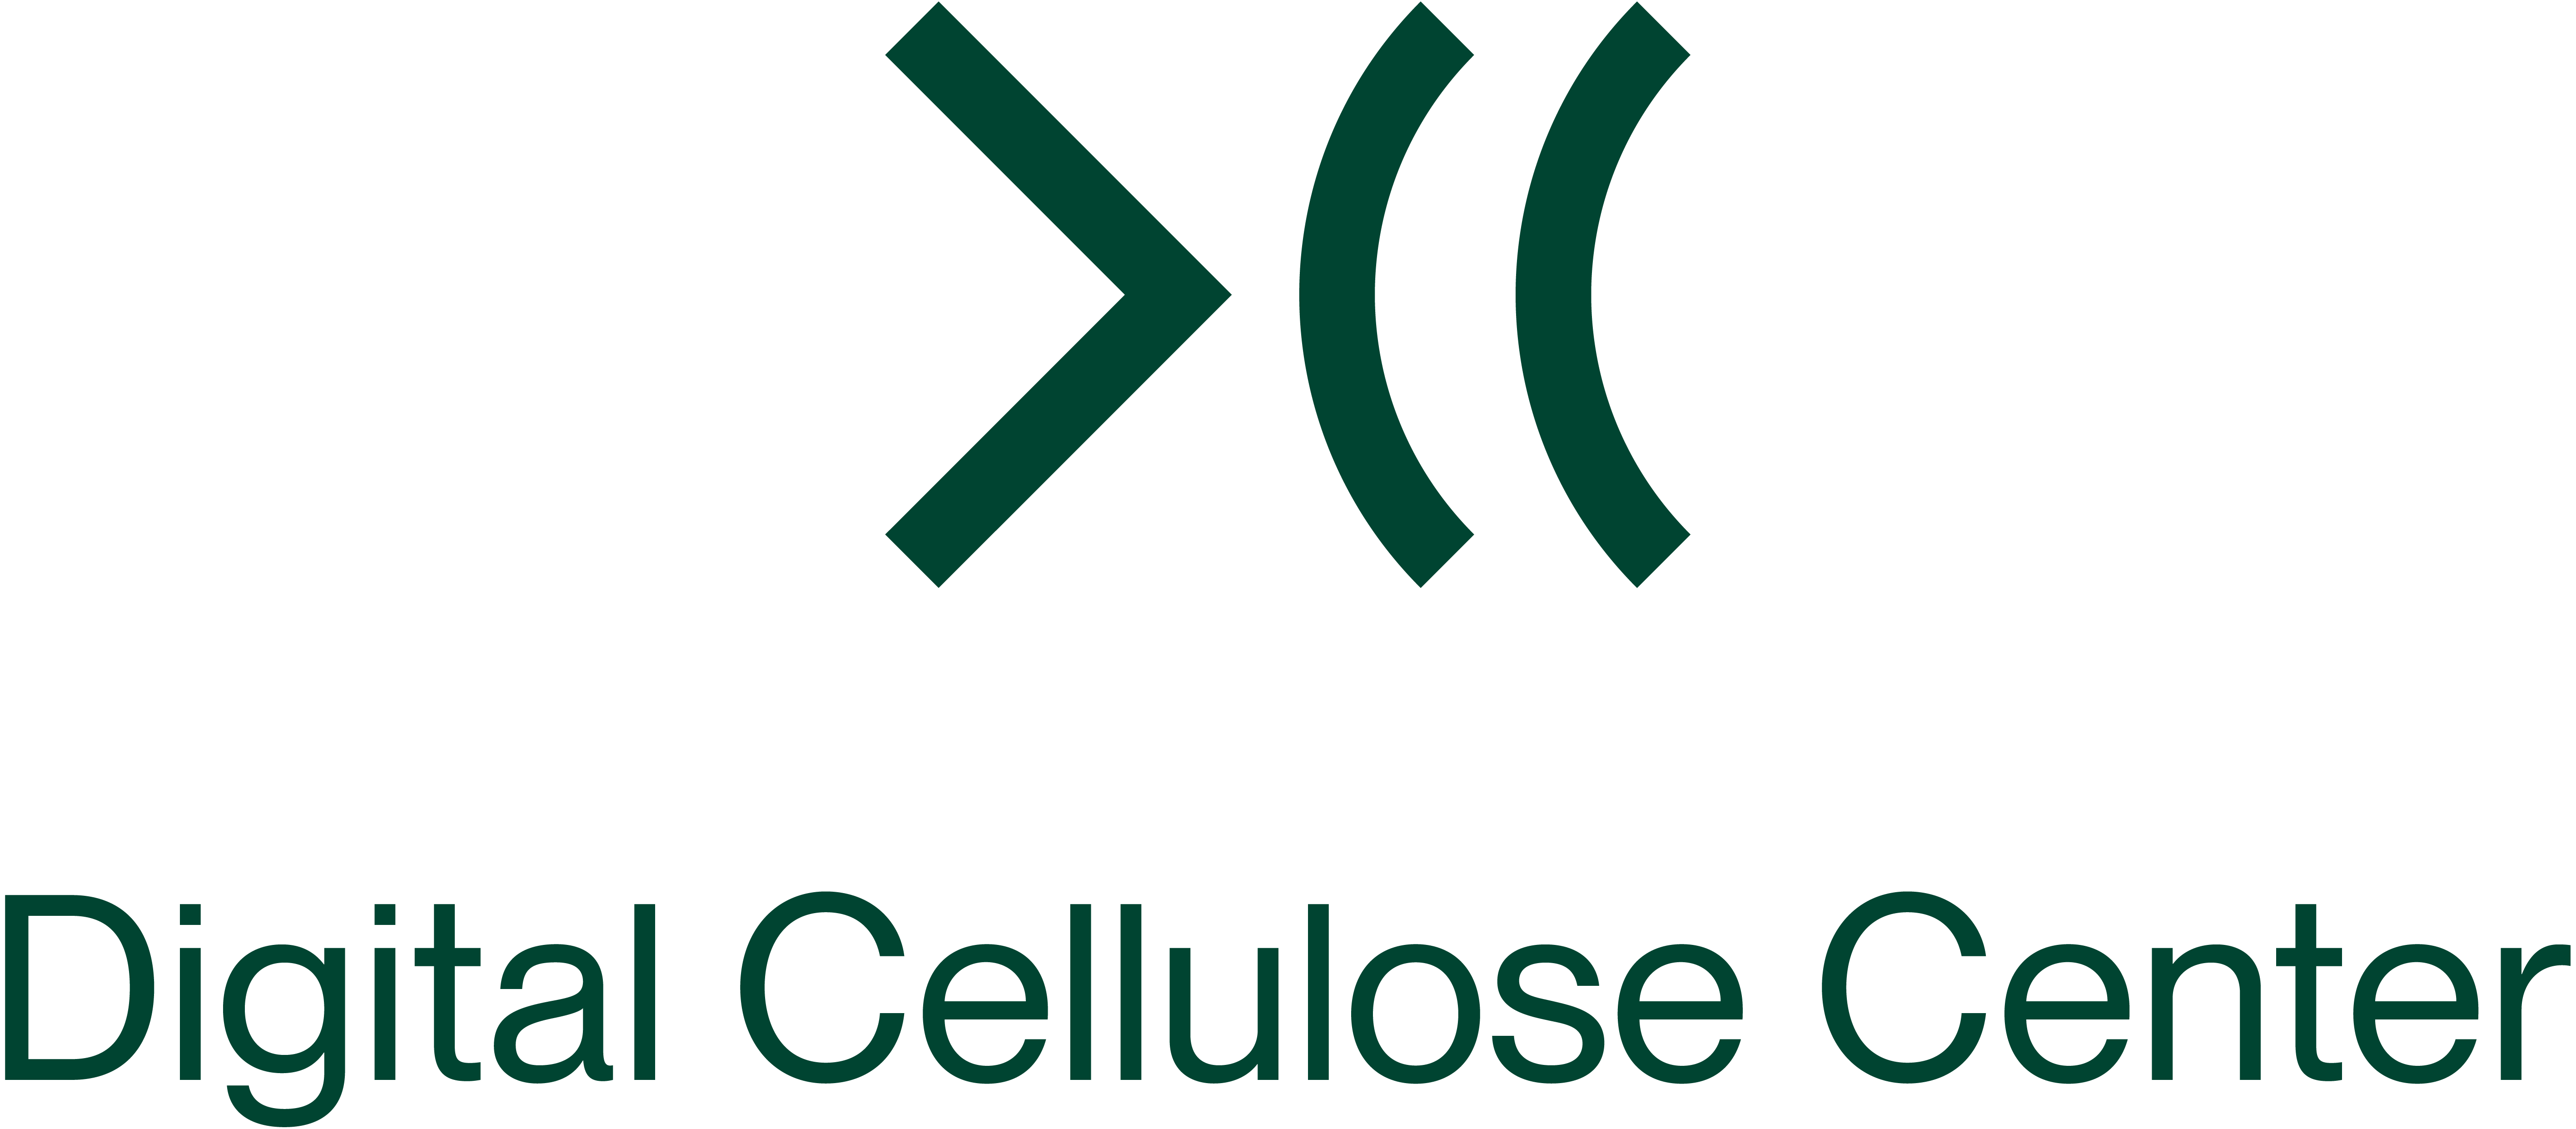 Digital Cellulose Center